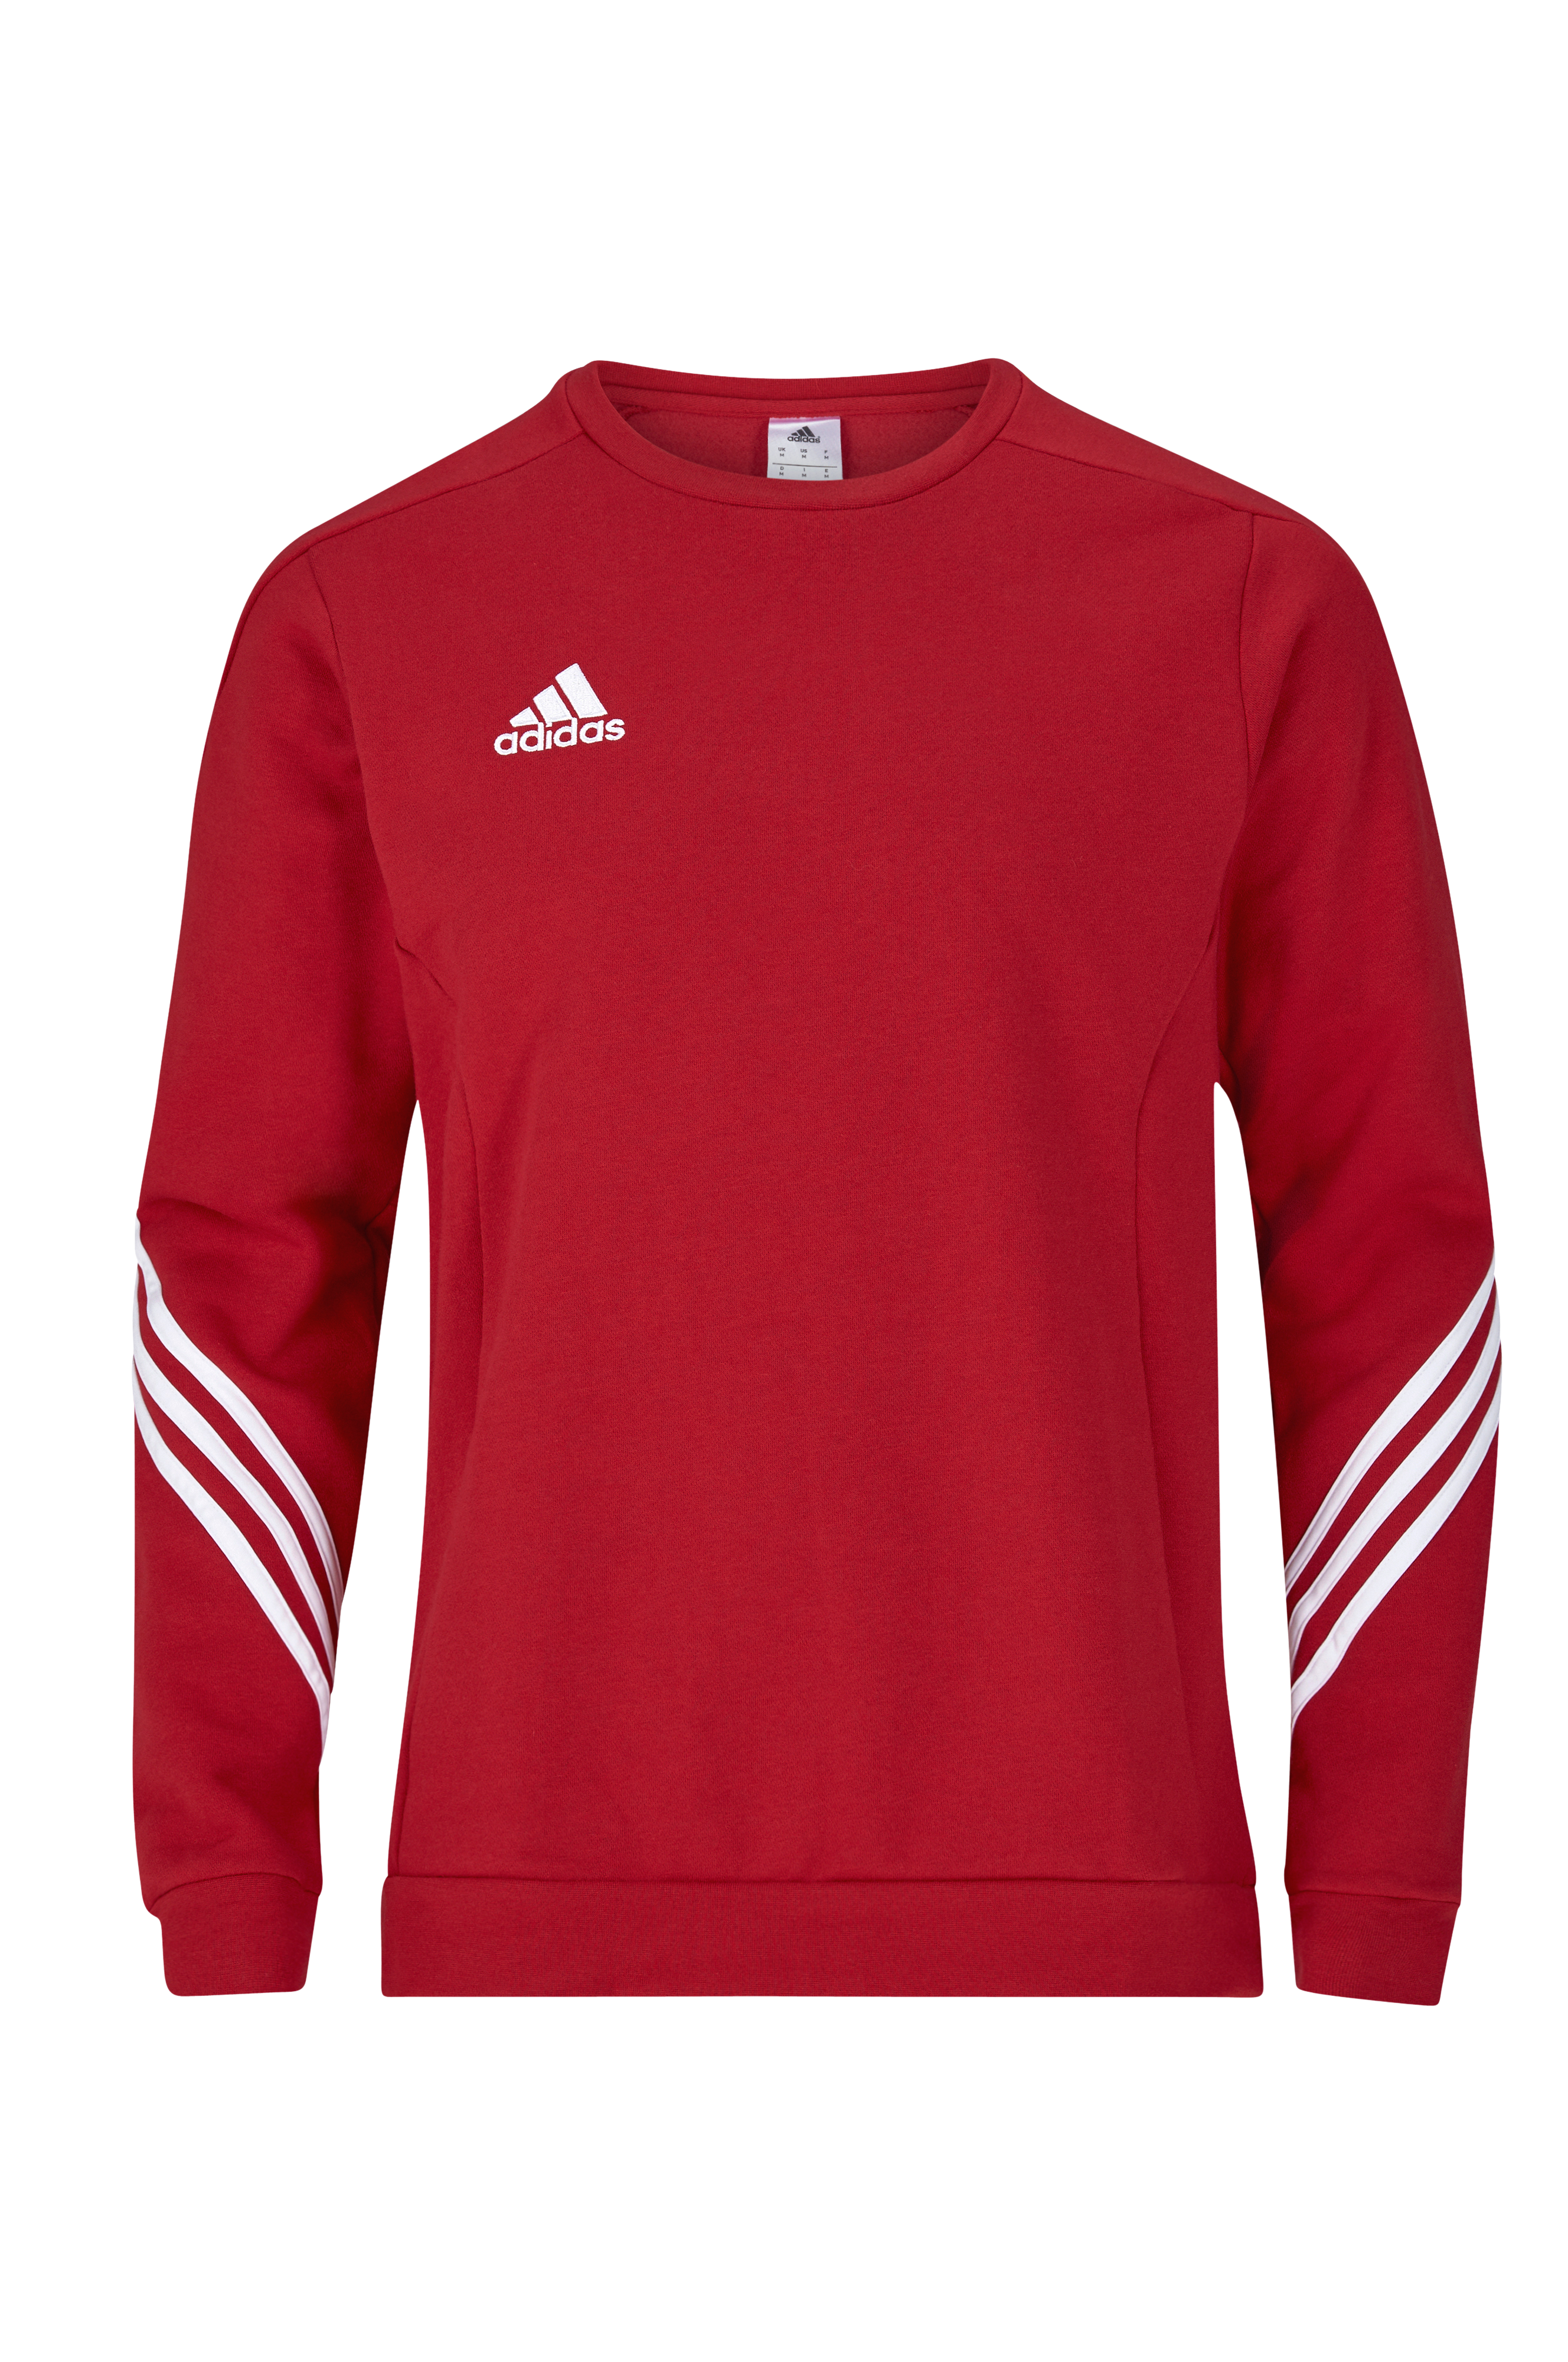 adidas Sport Performance Adidas Sweatsæt Sere14 Swt Suit - Rød Træningssæt |